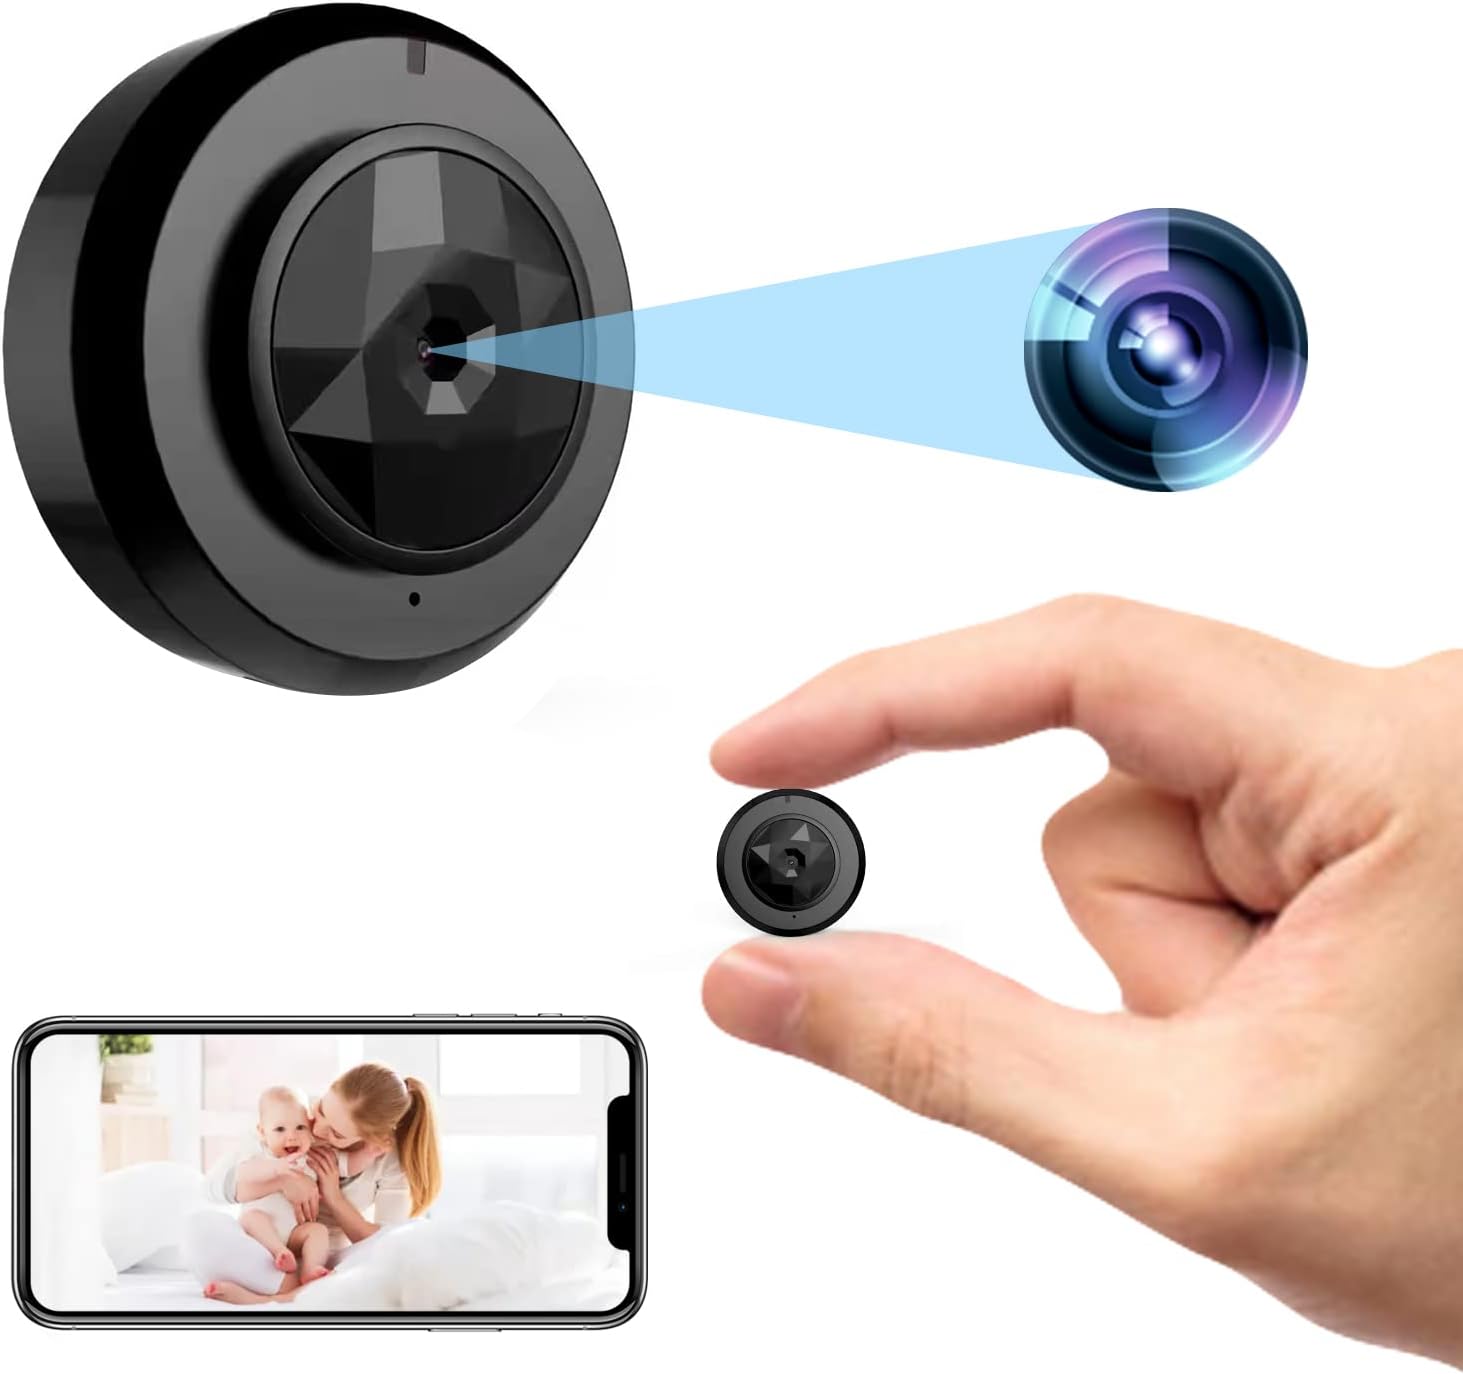 Generic Mini Spy Camera WiFi Hidden Camera with Audio Live Feed Home Security Surveillance Camera 1080P Hidden Nanny Cam Wireless with